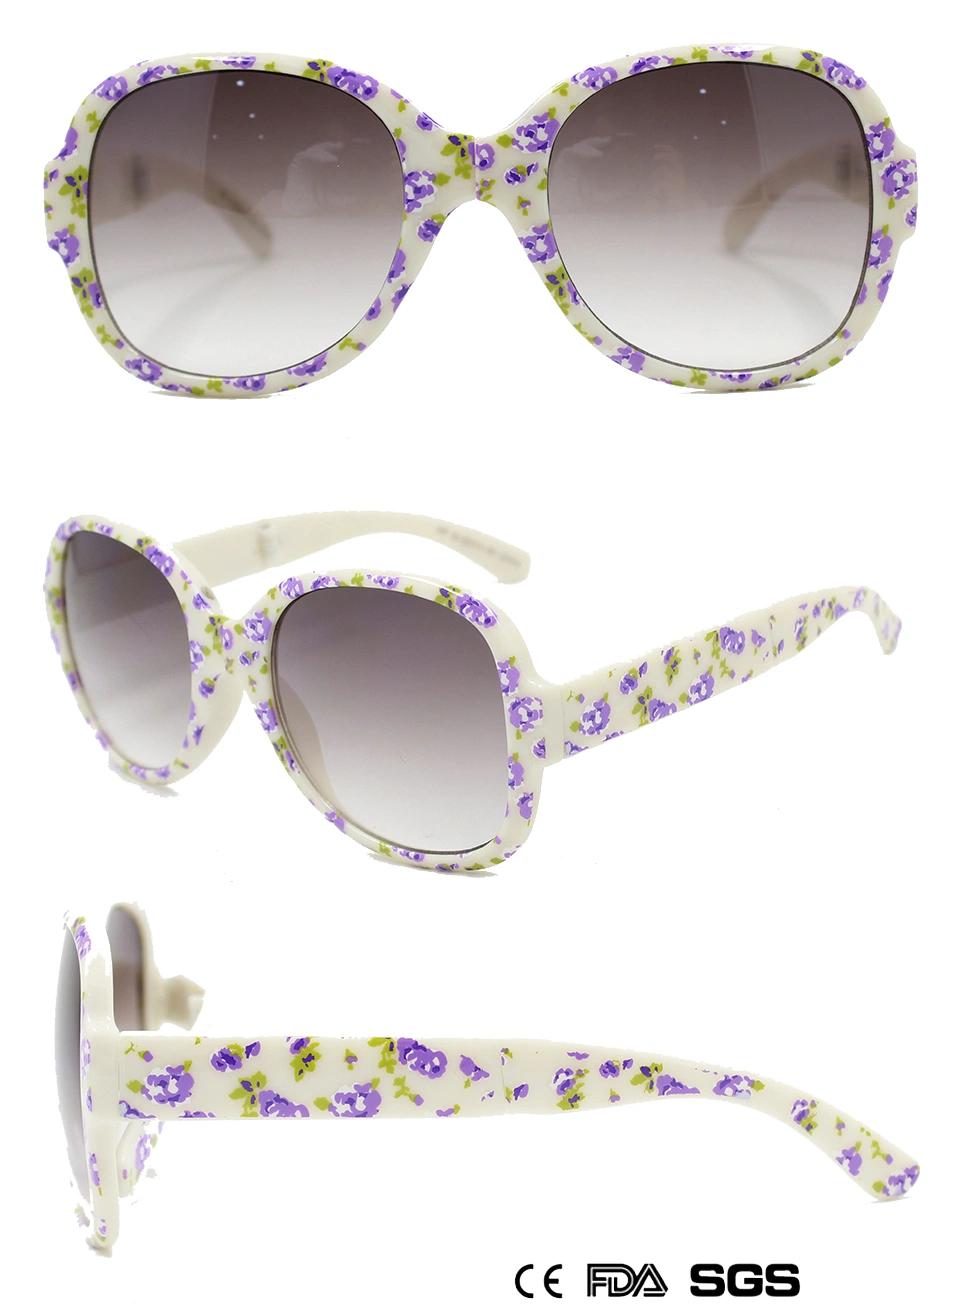 Fashionable Monochrome Sunglasses for Ladies (M11329)